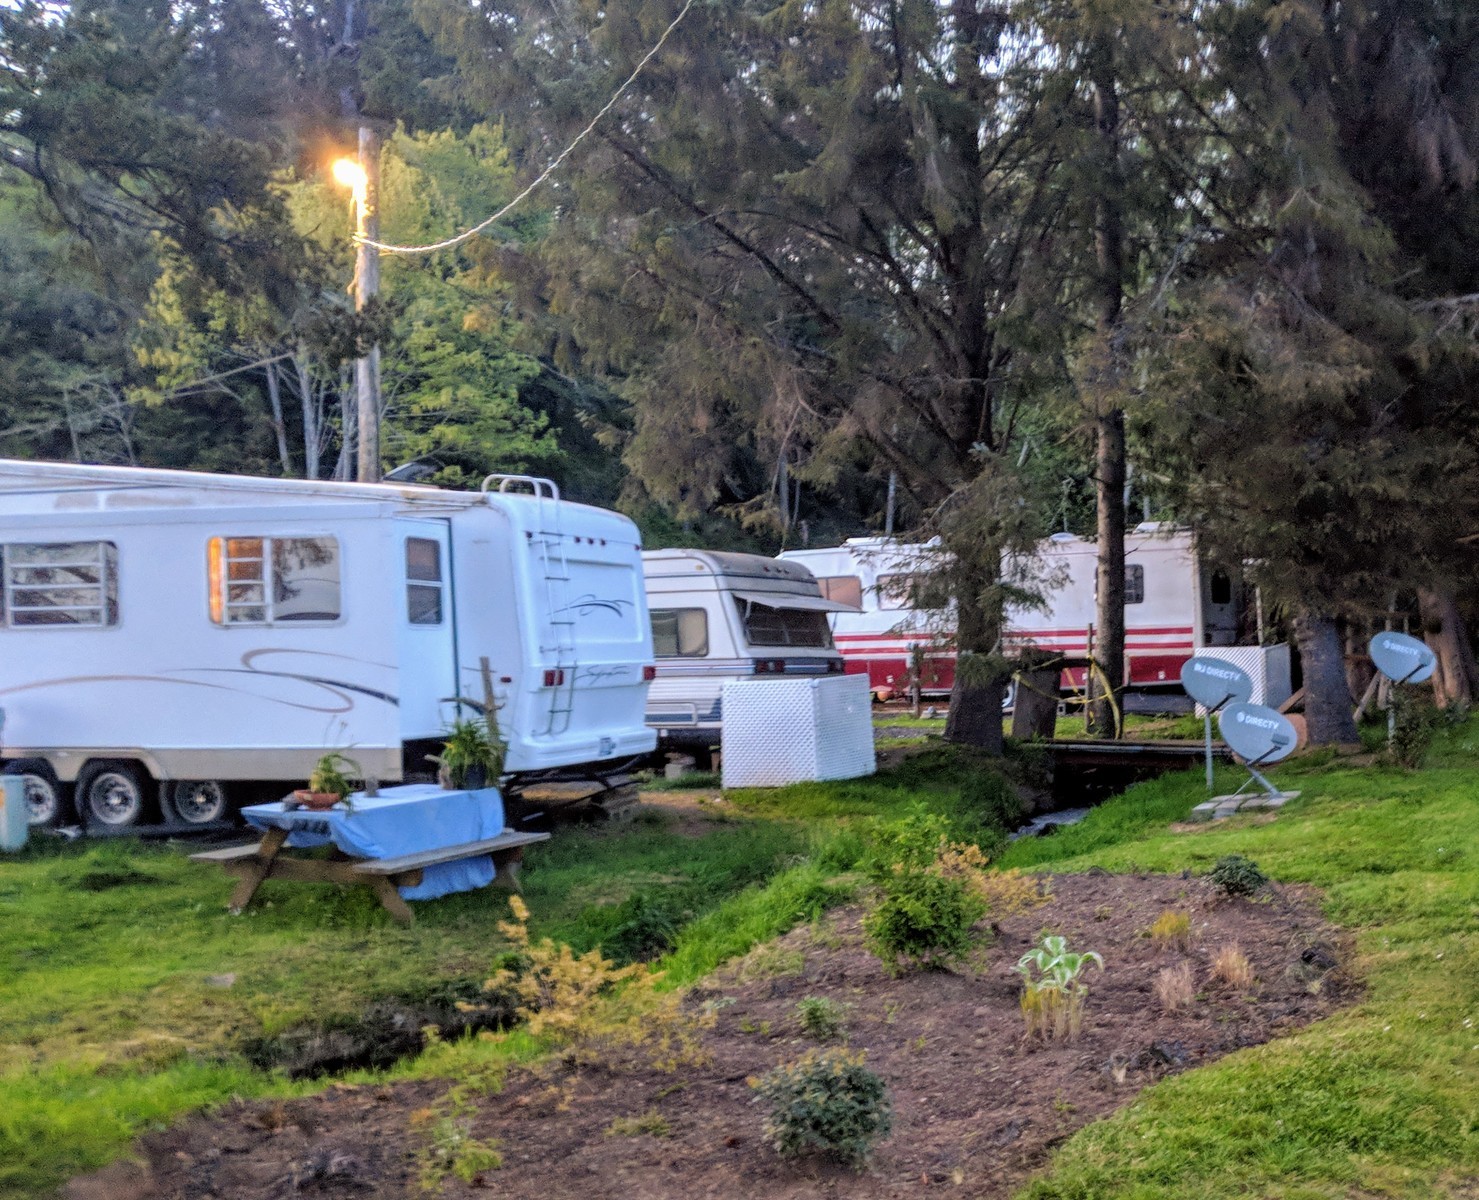 RoverPass Campground Management